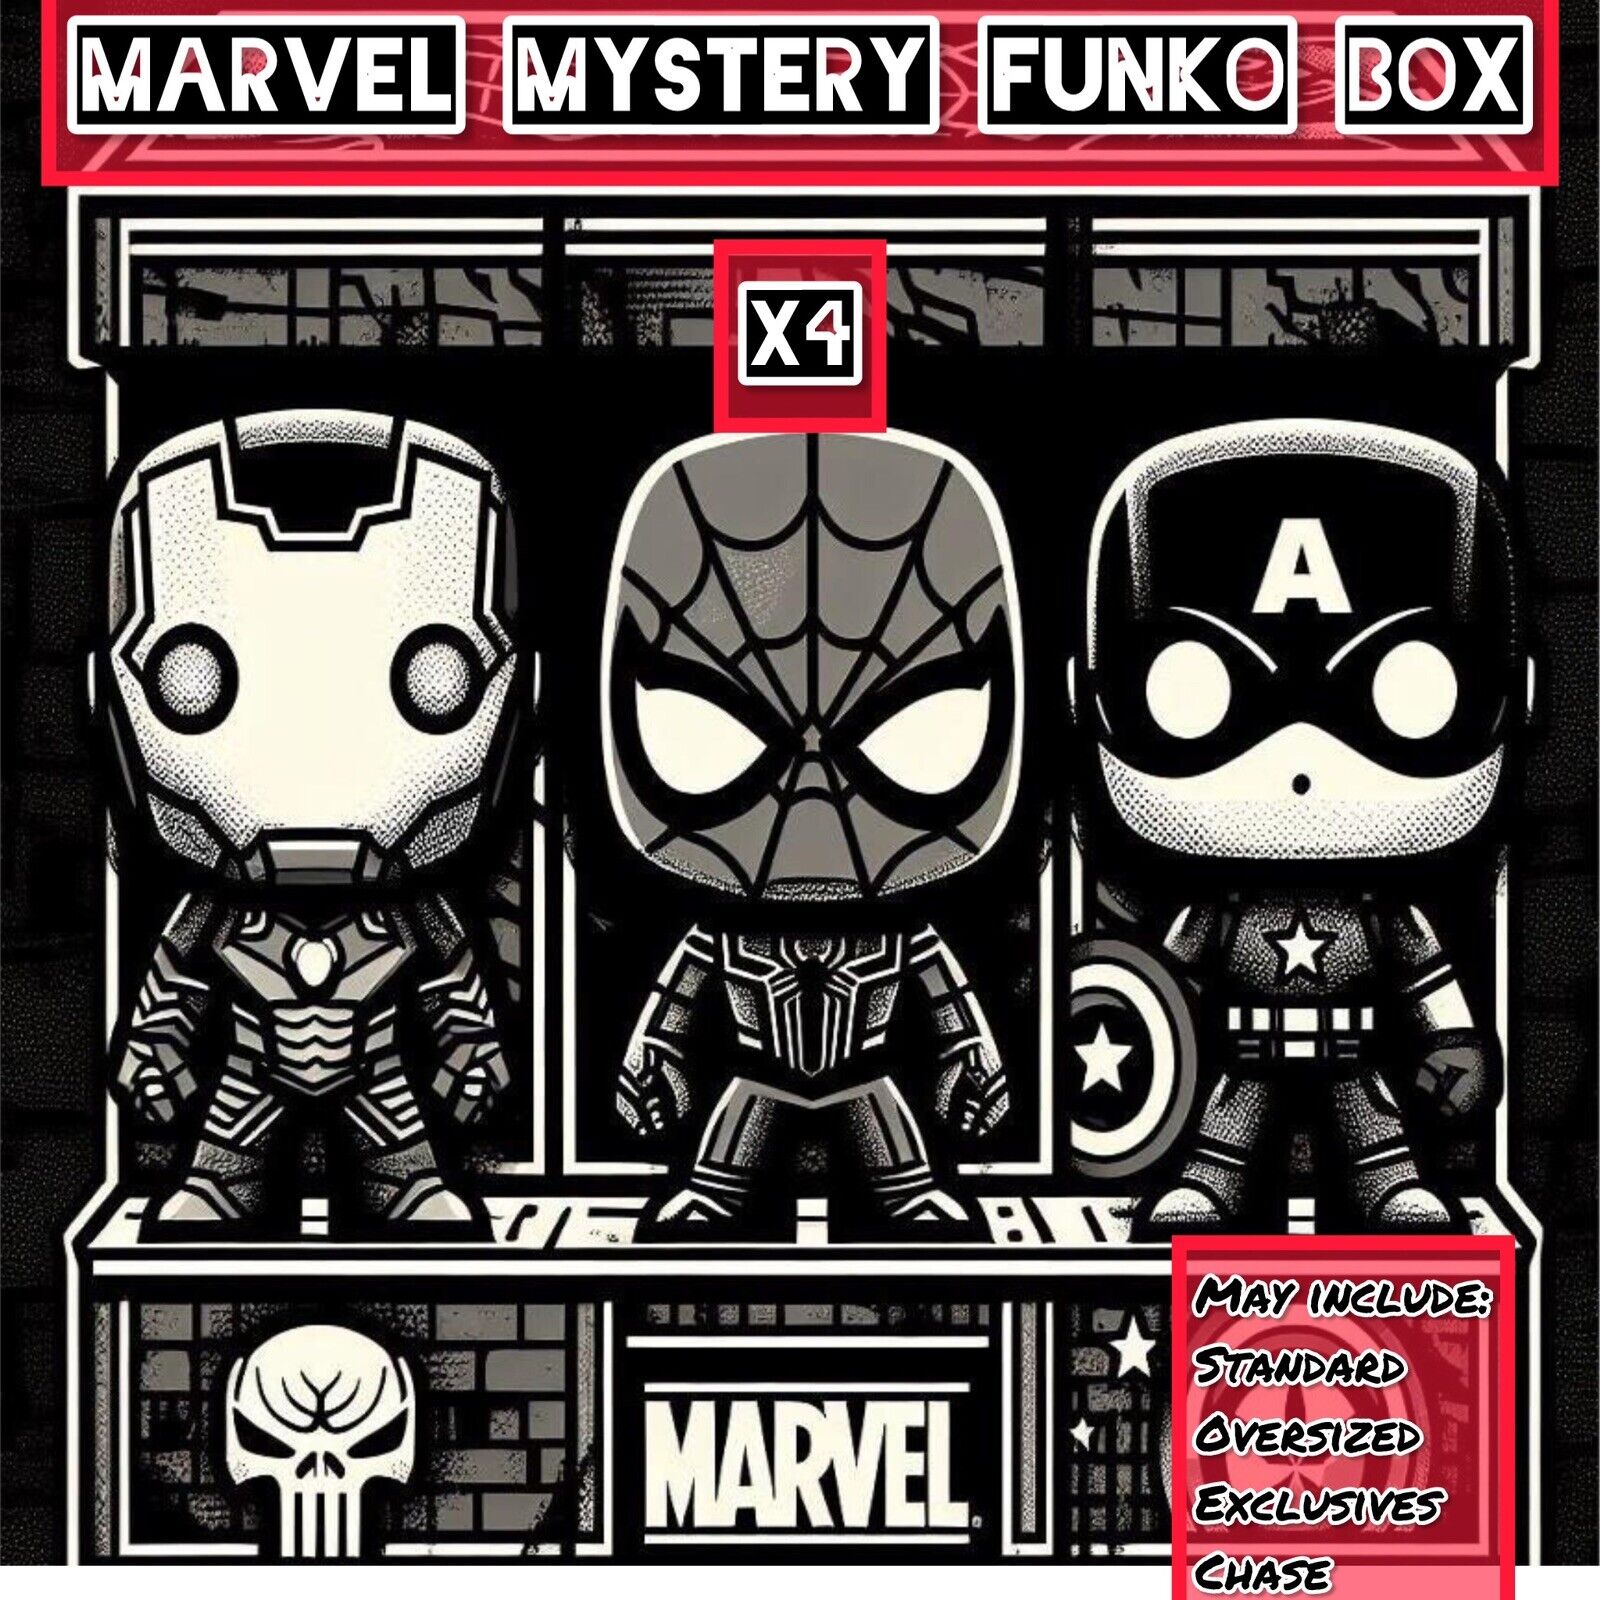 4 Marvel Funko Pop Mystery Box - Mystery Marvel Funko Pops In Pop Protecters